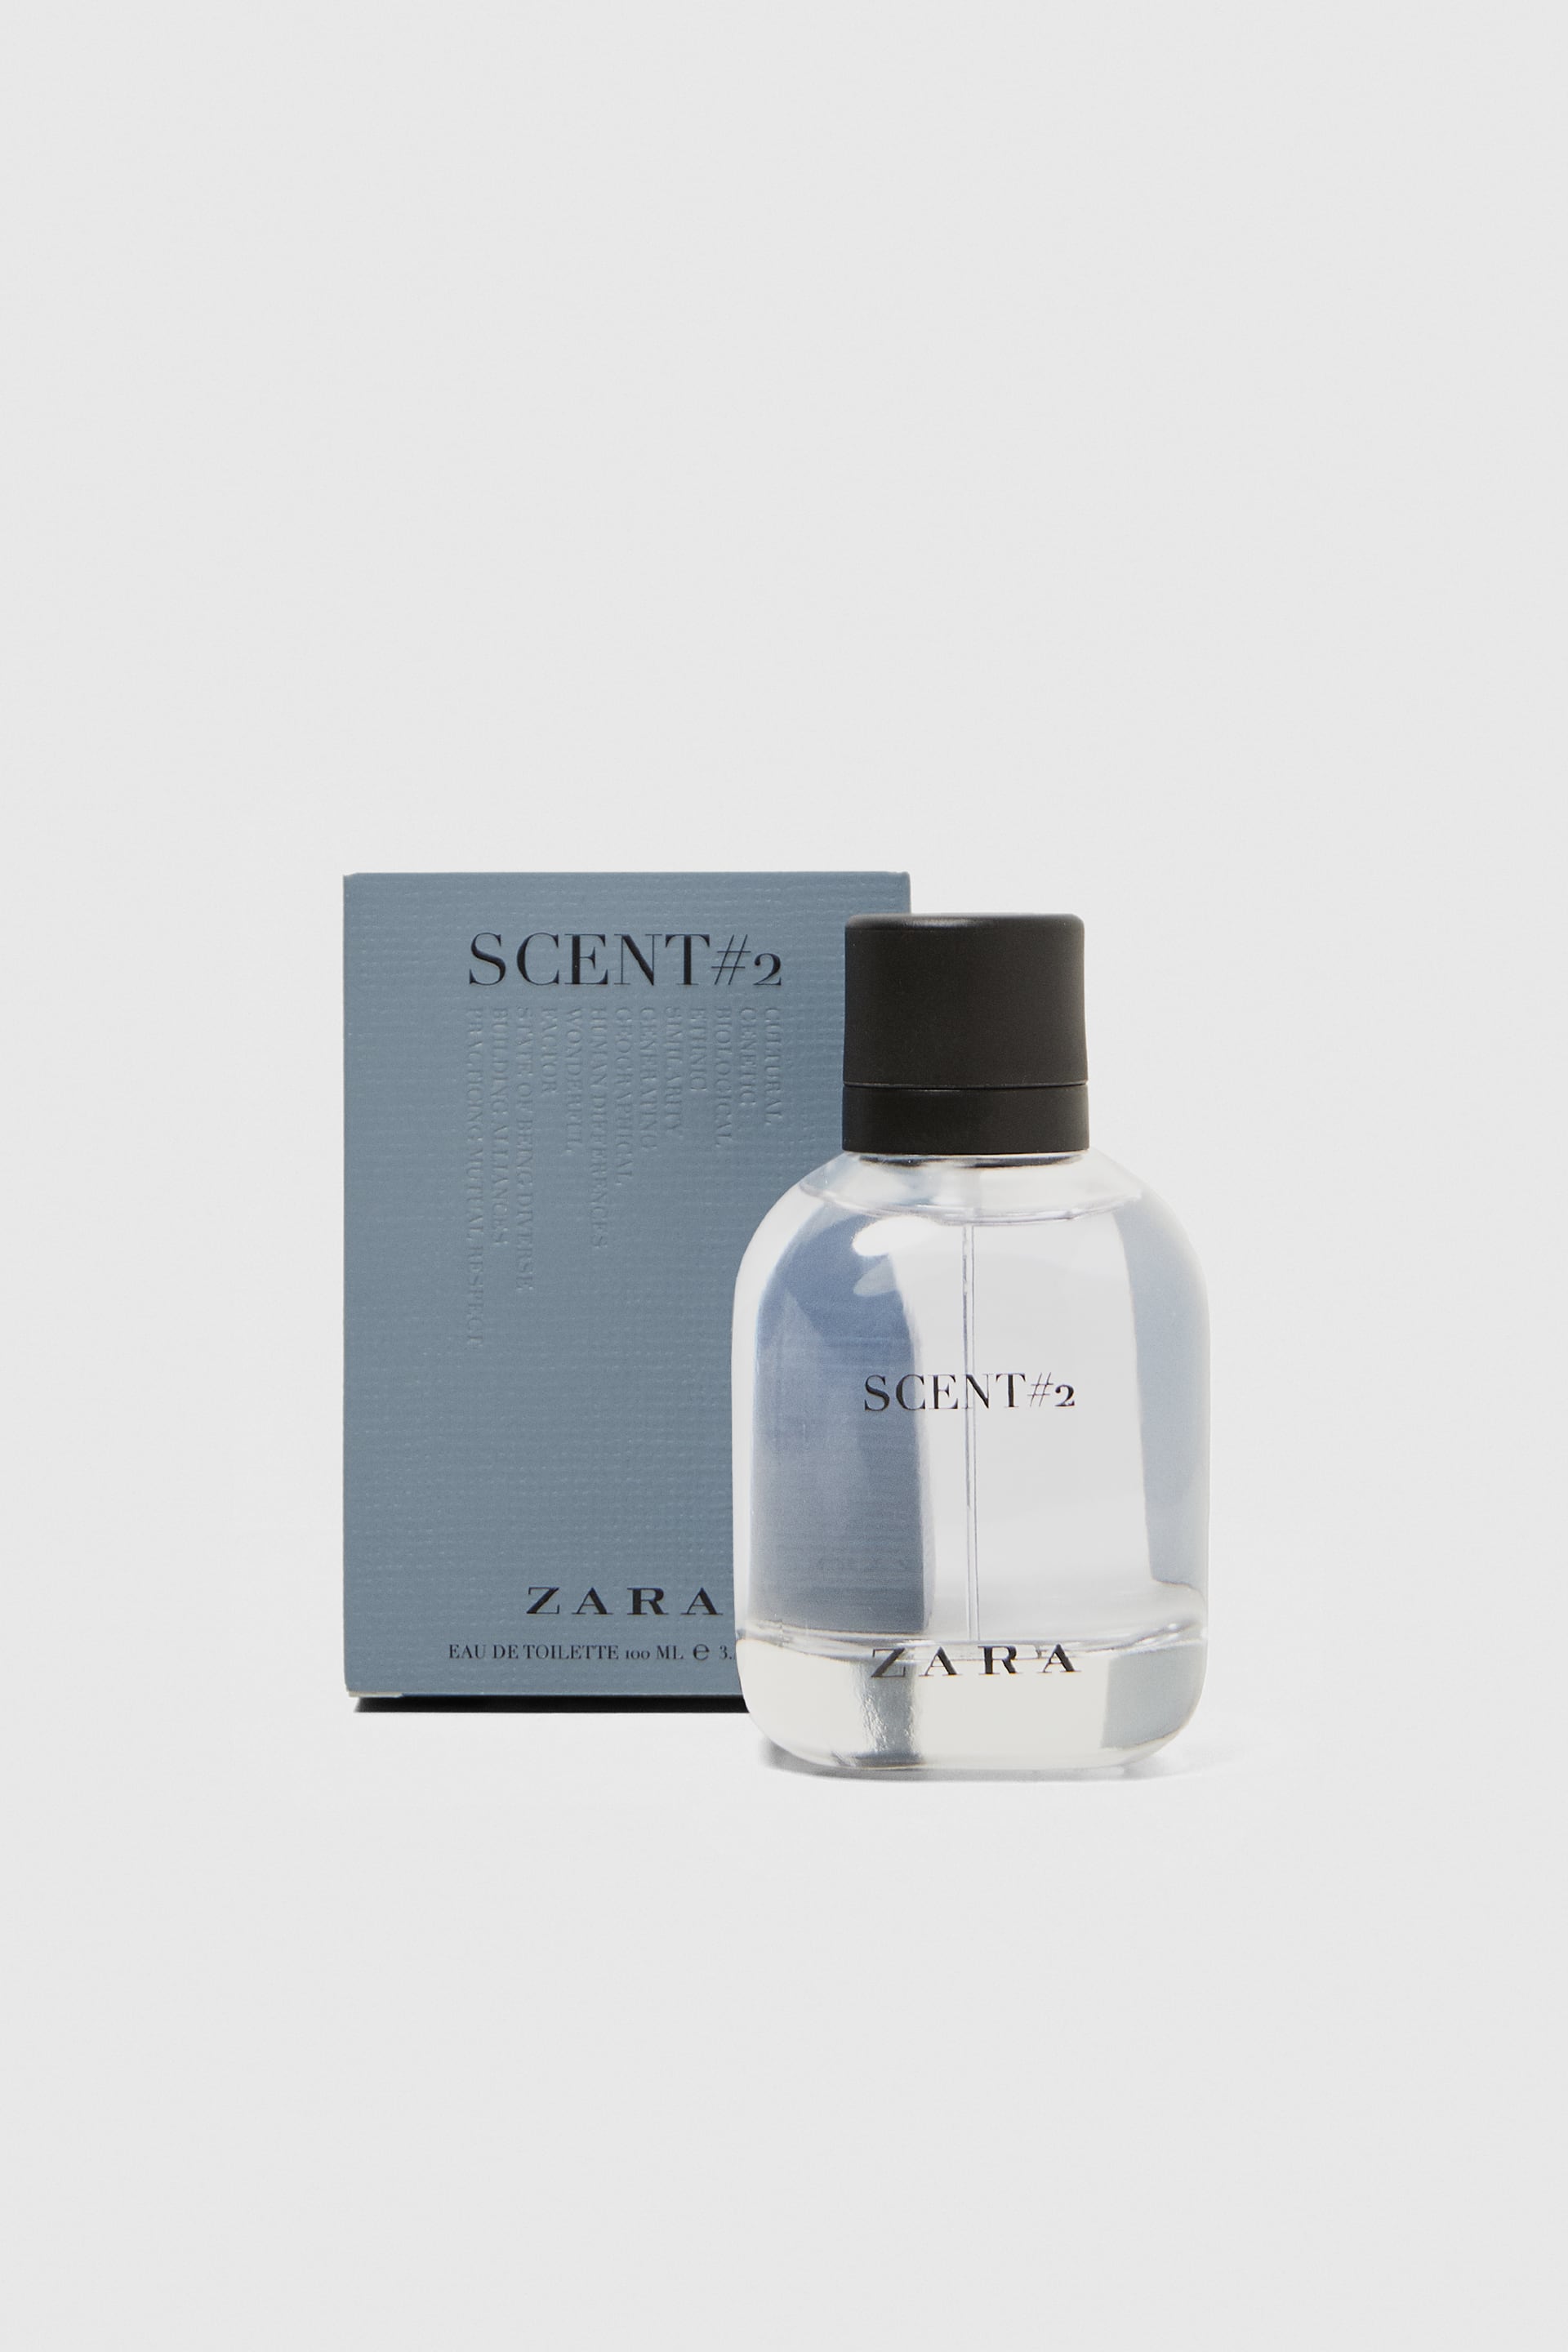 Scent #2 Zara одеколон — новый аромат 